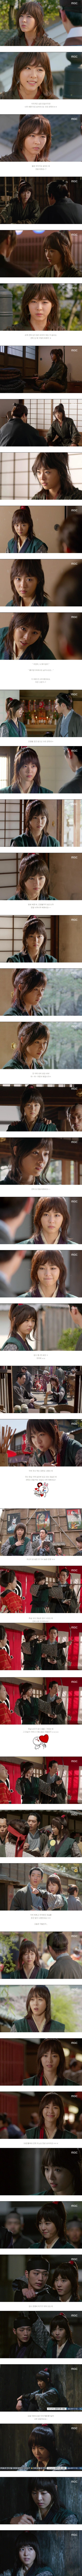 episode 9 captures for the Korean drama 'Splendid Politics'